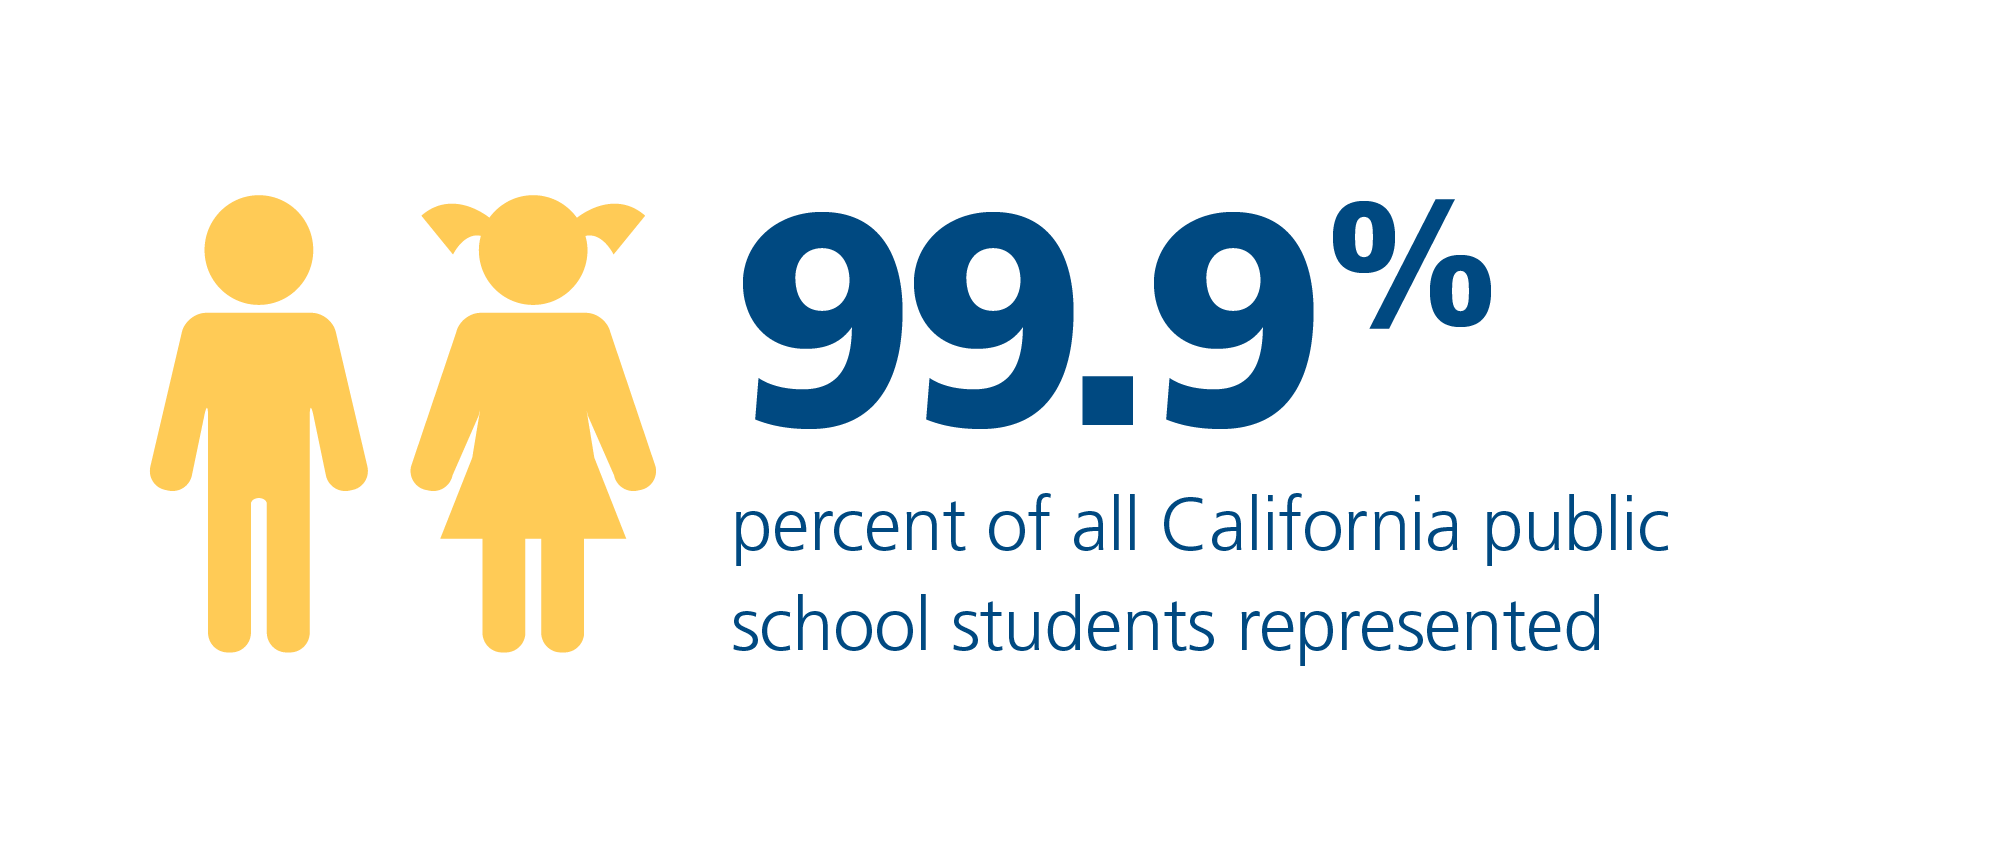 99.9% of all California public school students represented